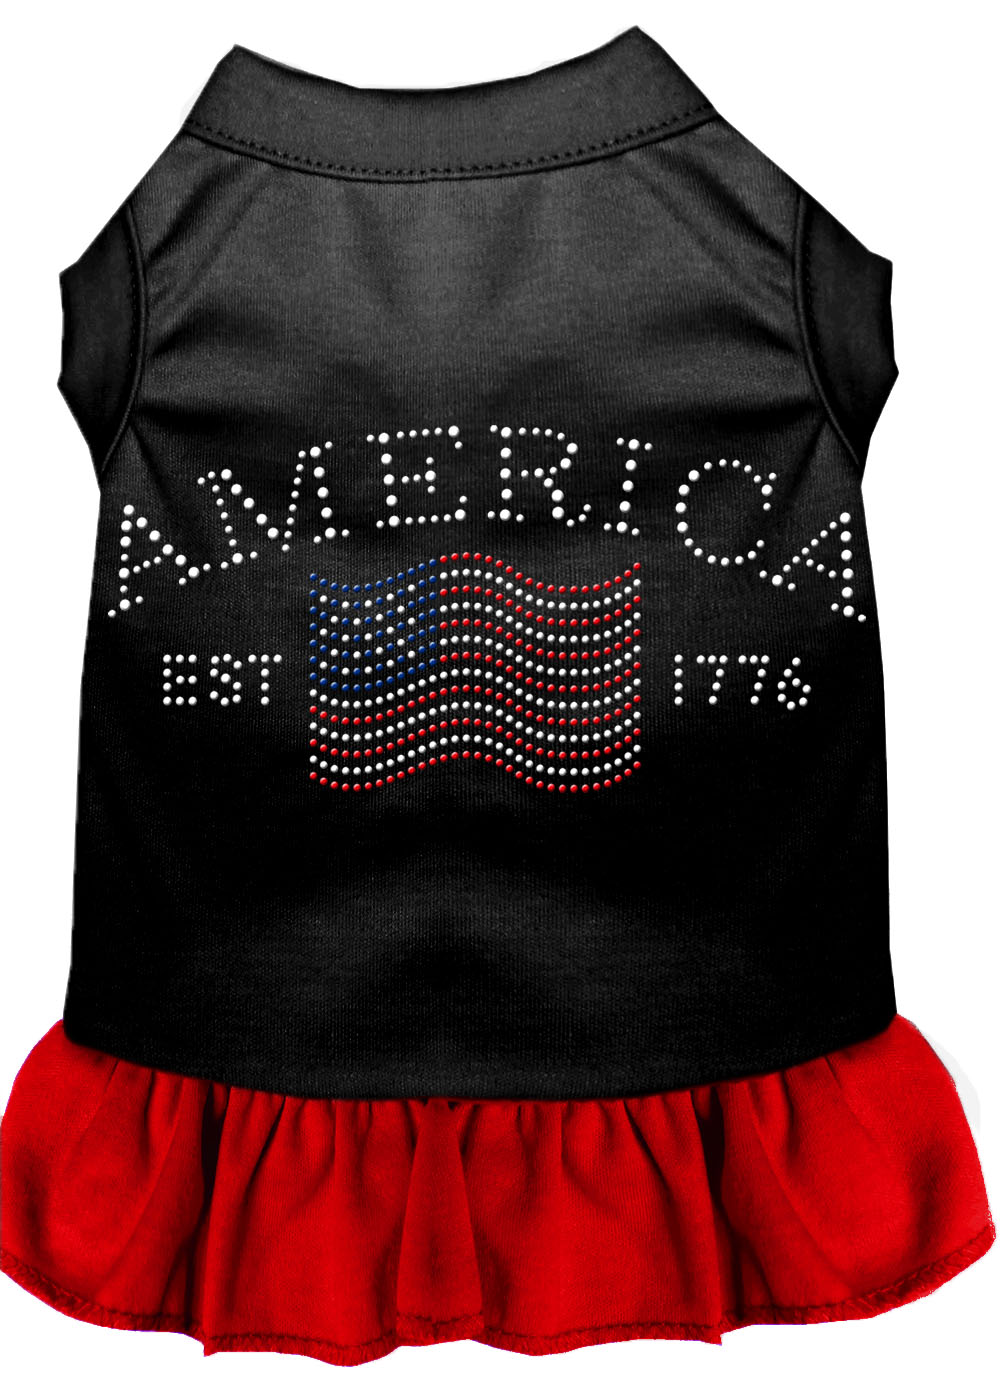 Classic America Rhinestone Dress Black with Red Med